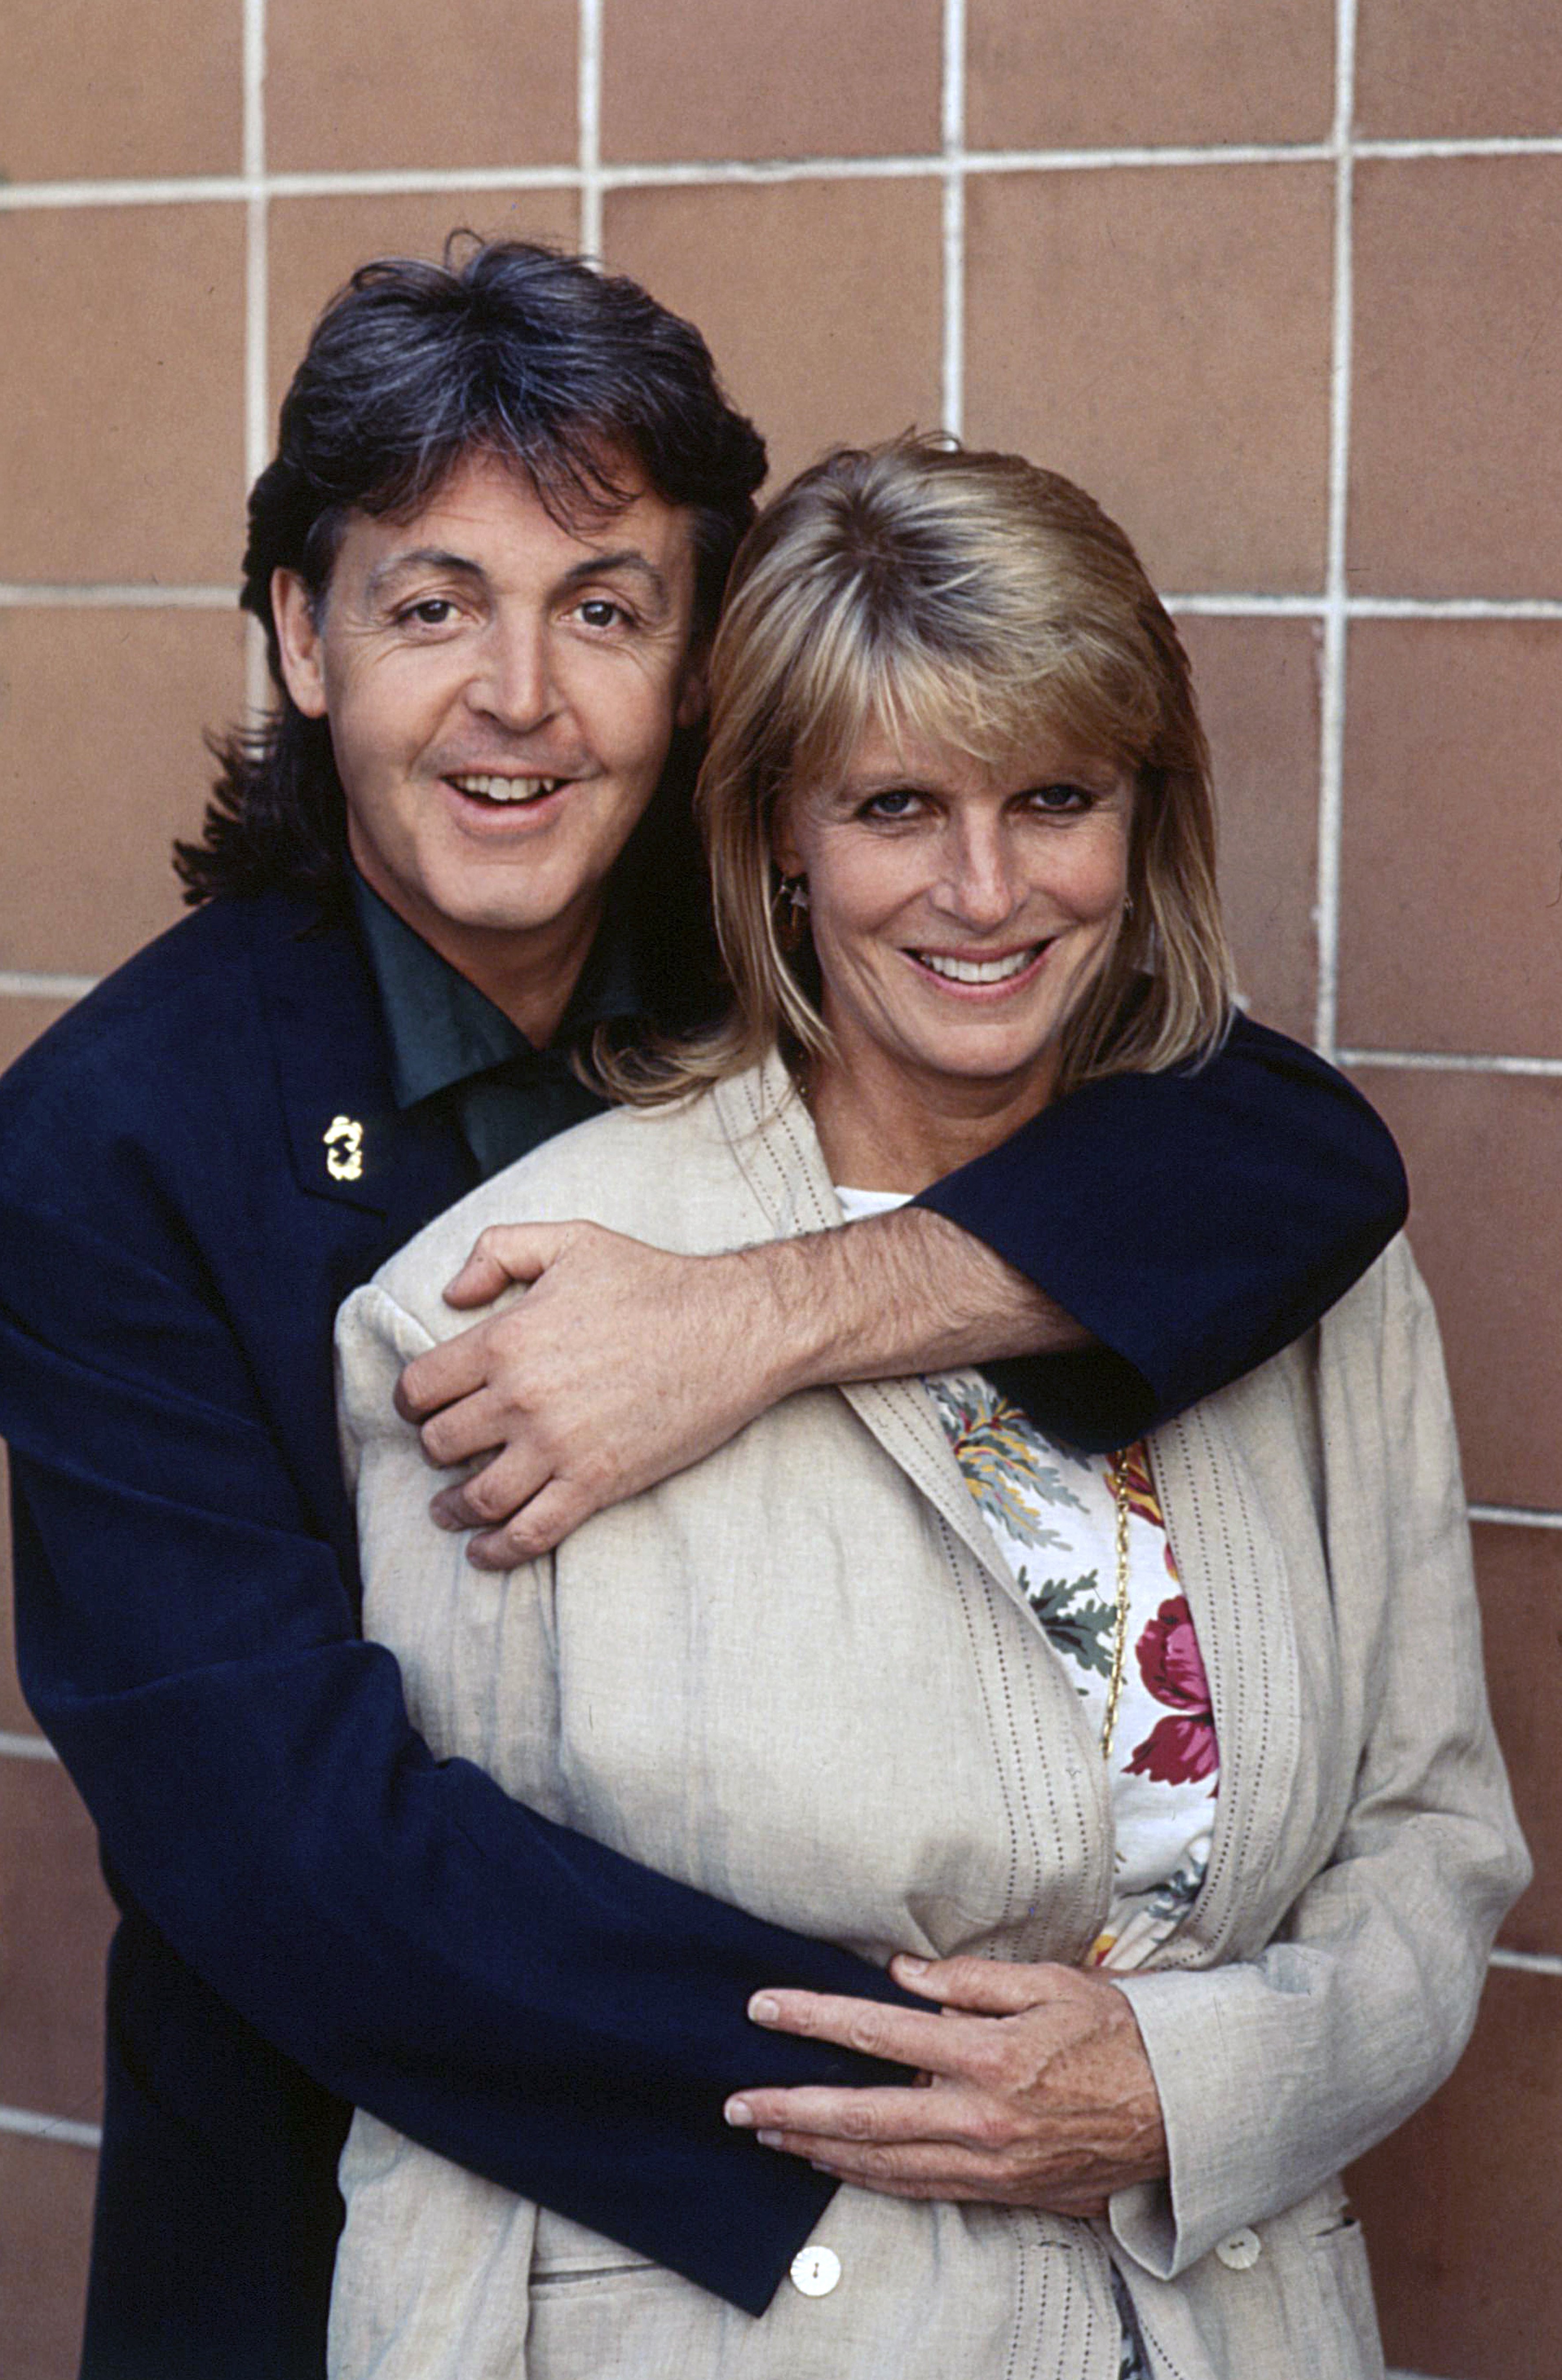 Paul McCartney embrassant son ex-femme Linda Eastman en 1989 | Source : Getty Images